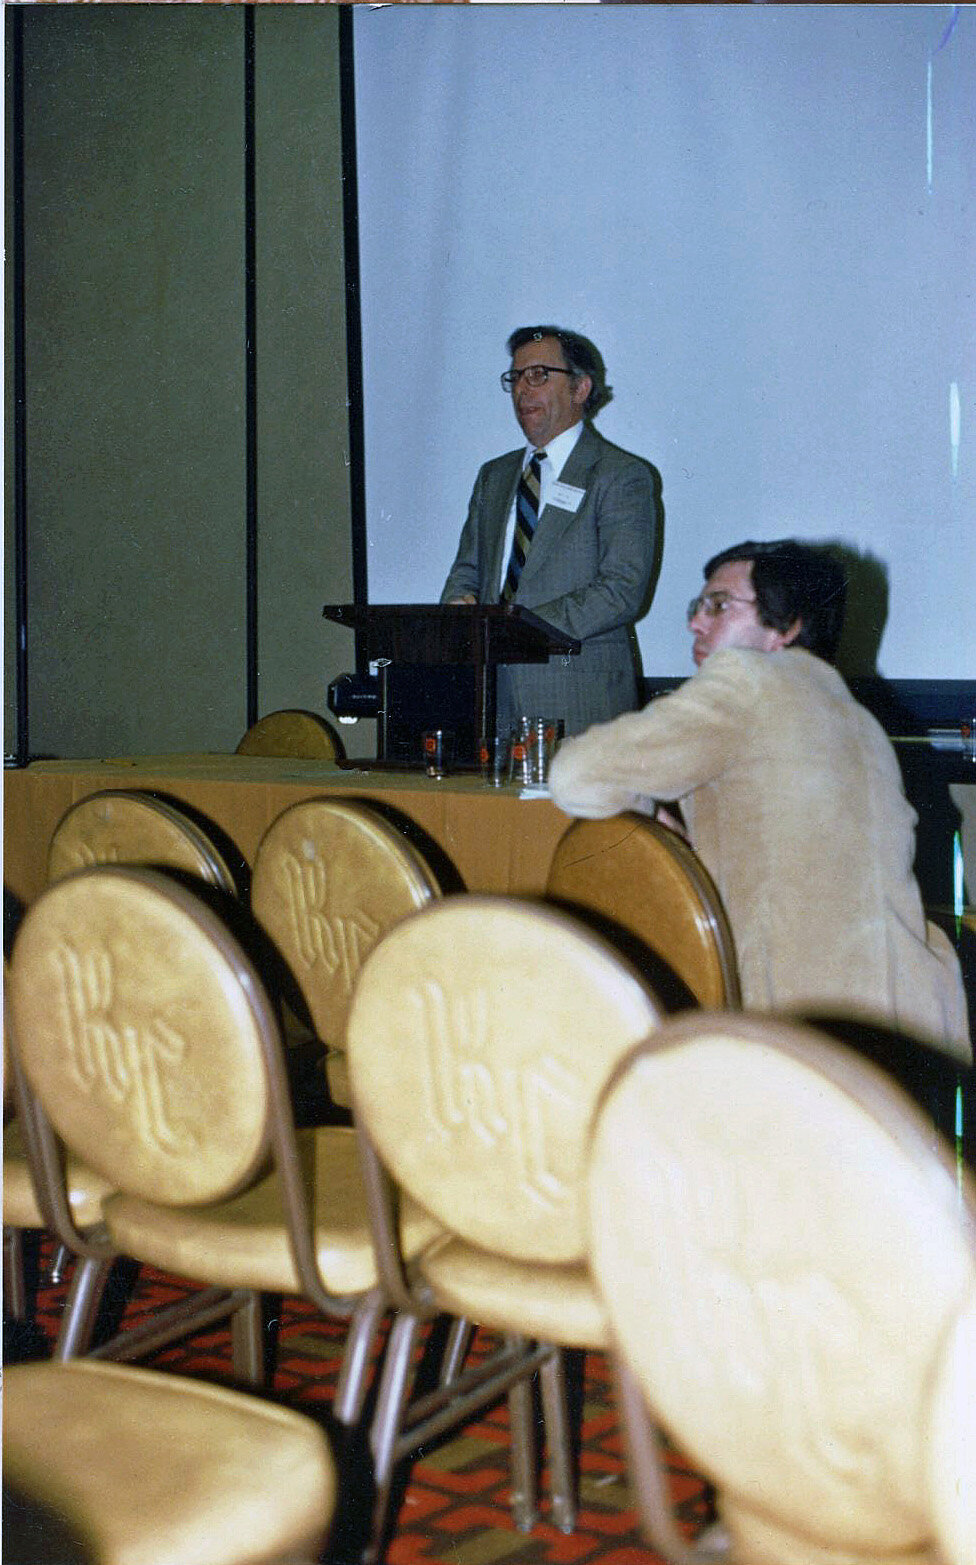 Marc Tool (presenting), Jim Sturgeon (audience)